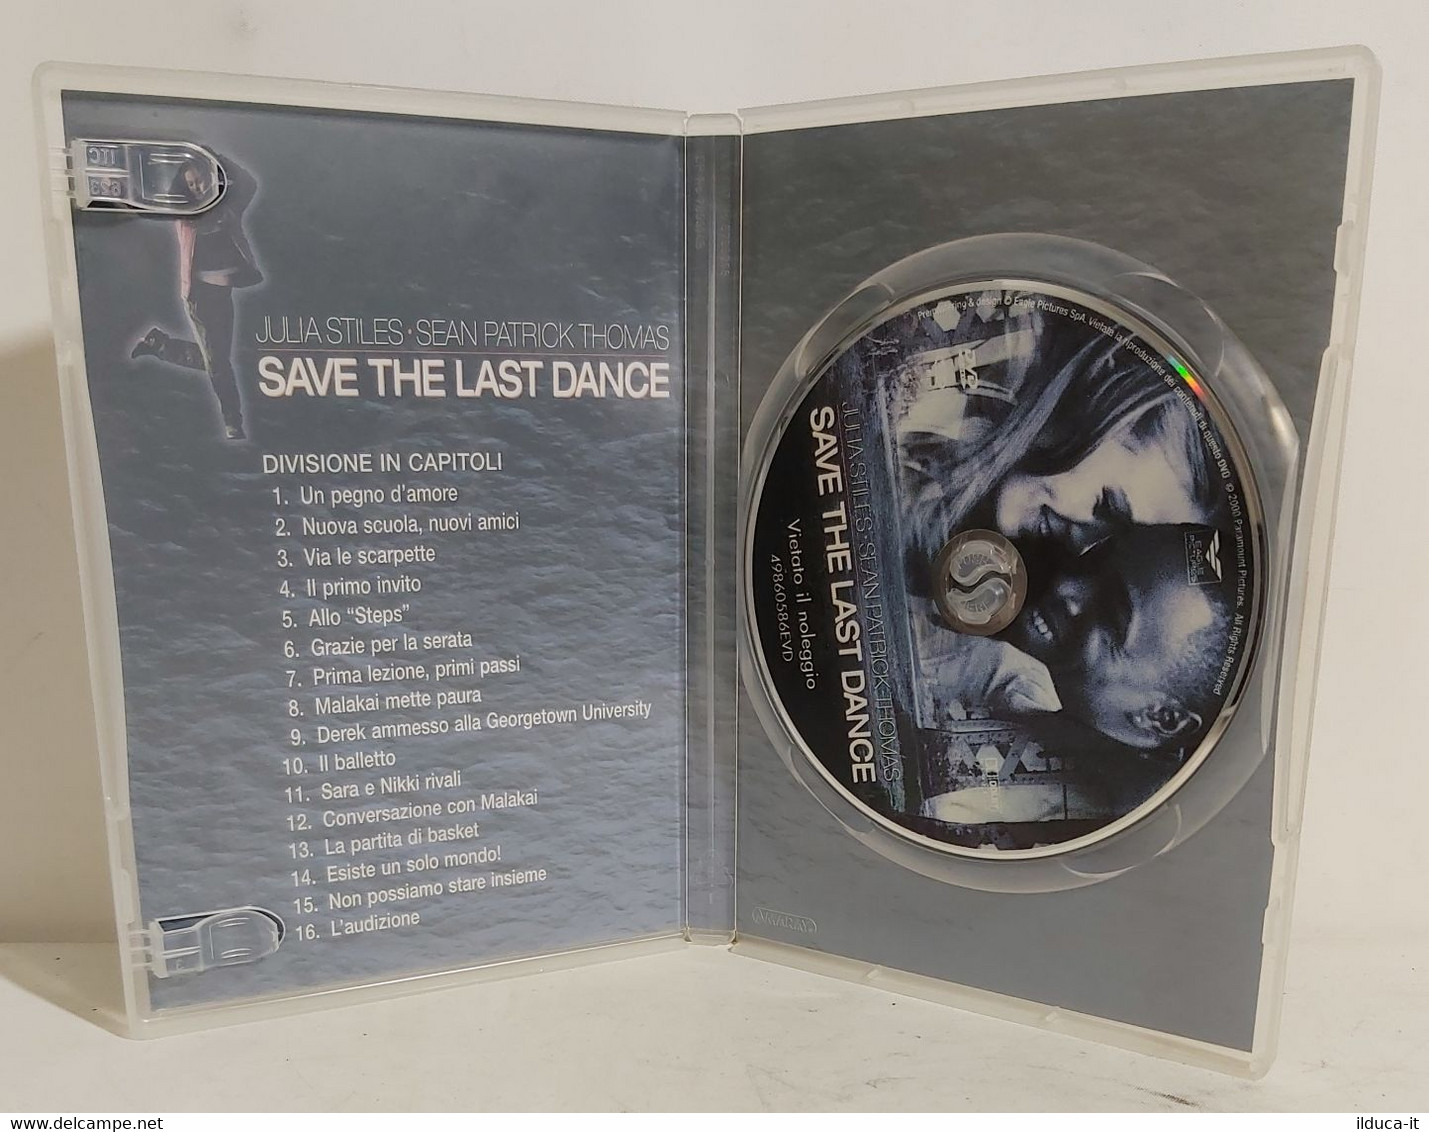 I101492 DVD - Save The Last Dance - Julia Stiles Sean Patrick Thomas - Romantiek